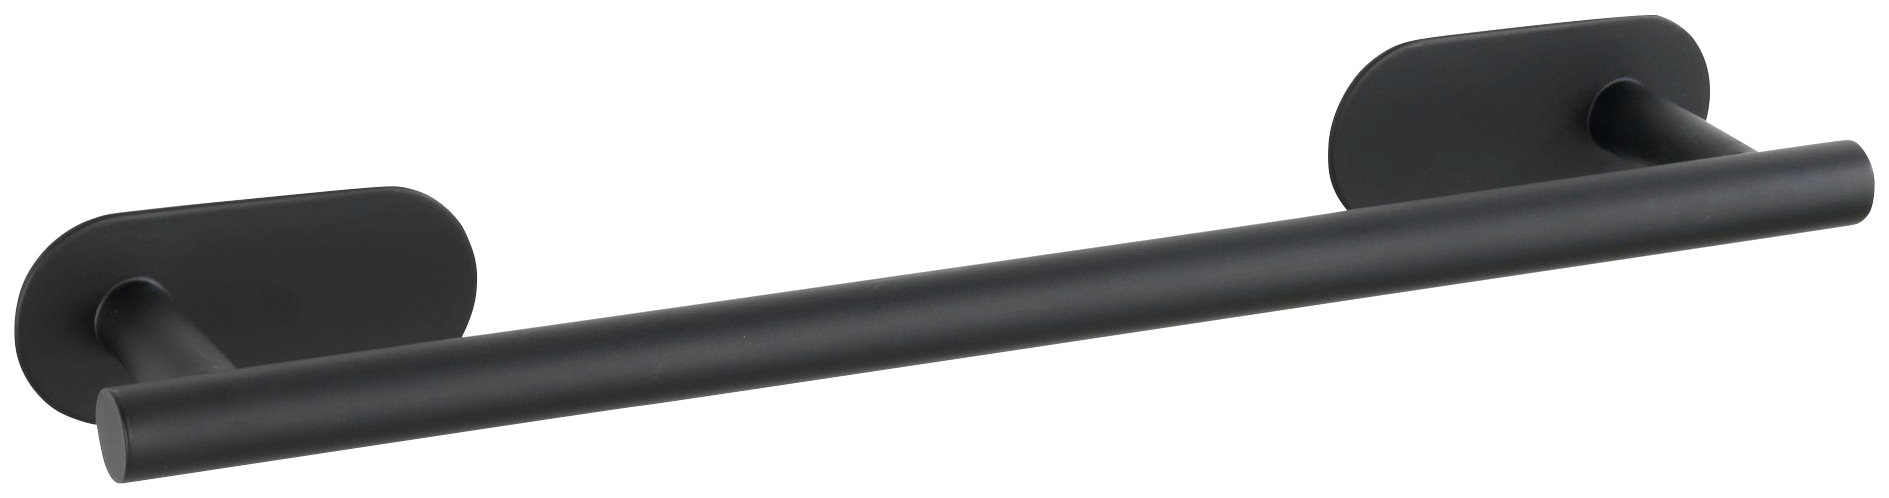 Handtuchhalter »Orea Black«, BxTxH: 40x7x4,5 cm, befestigen ohne bohren